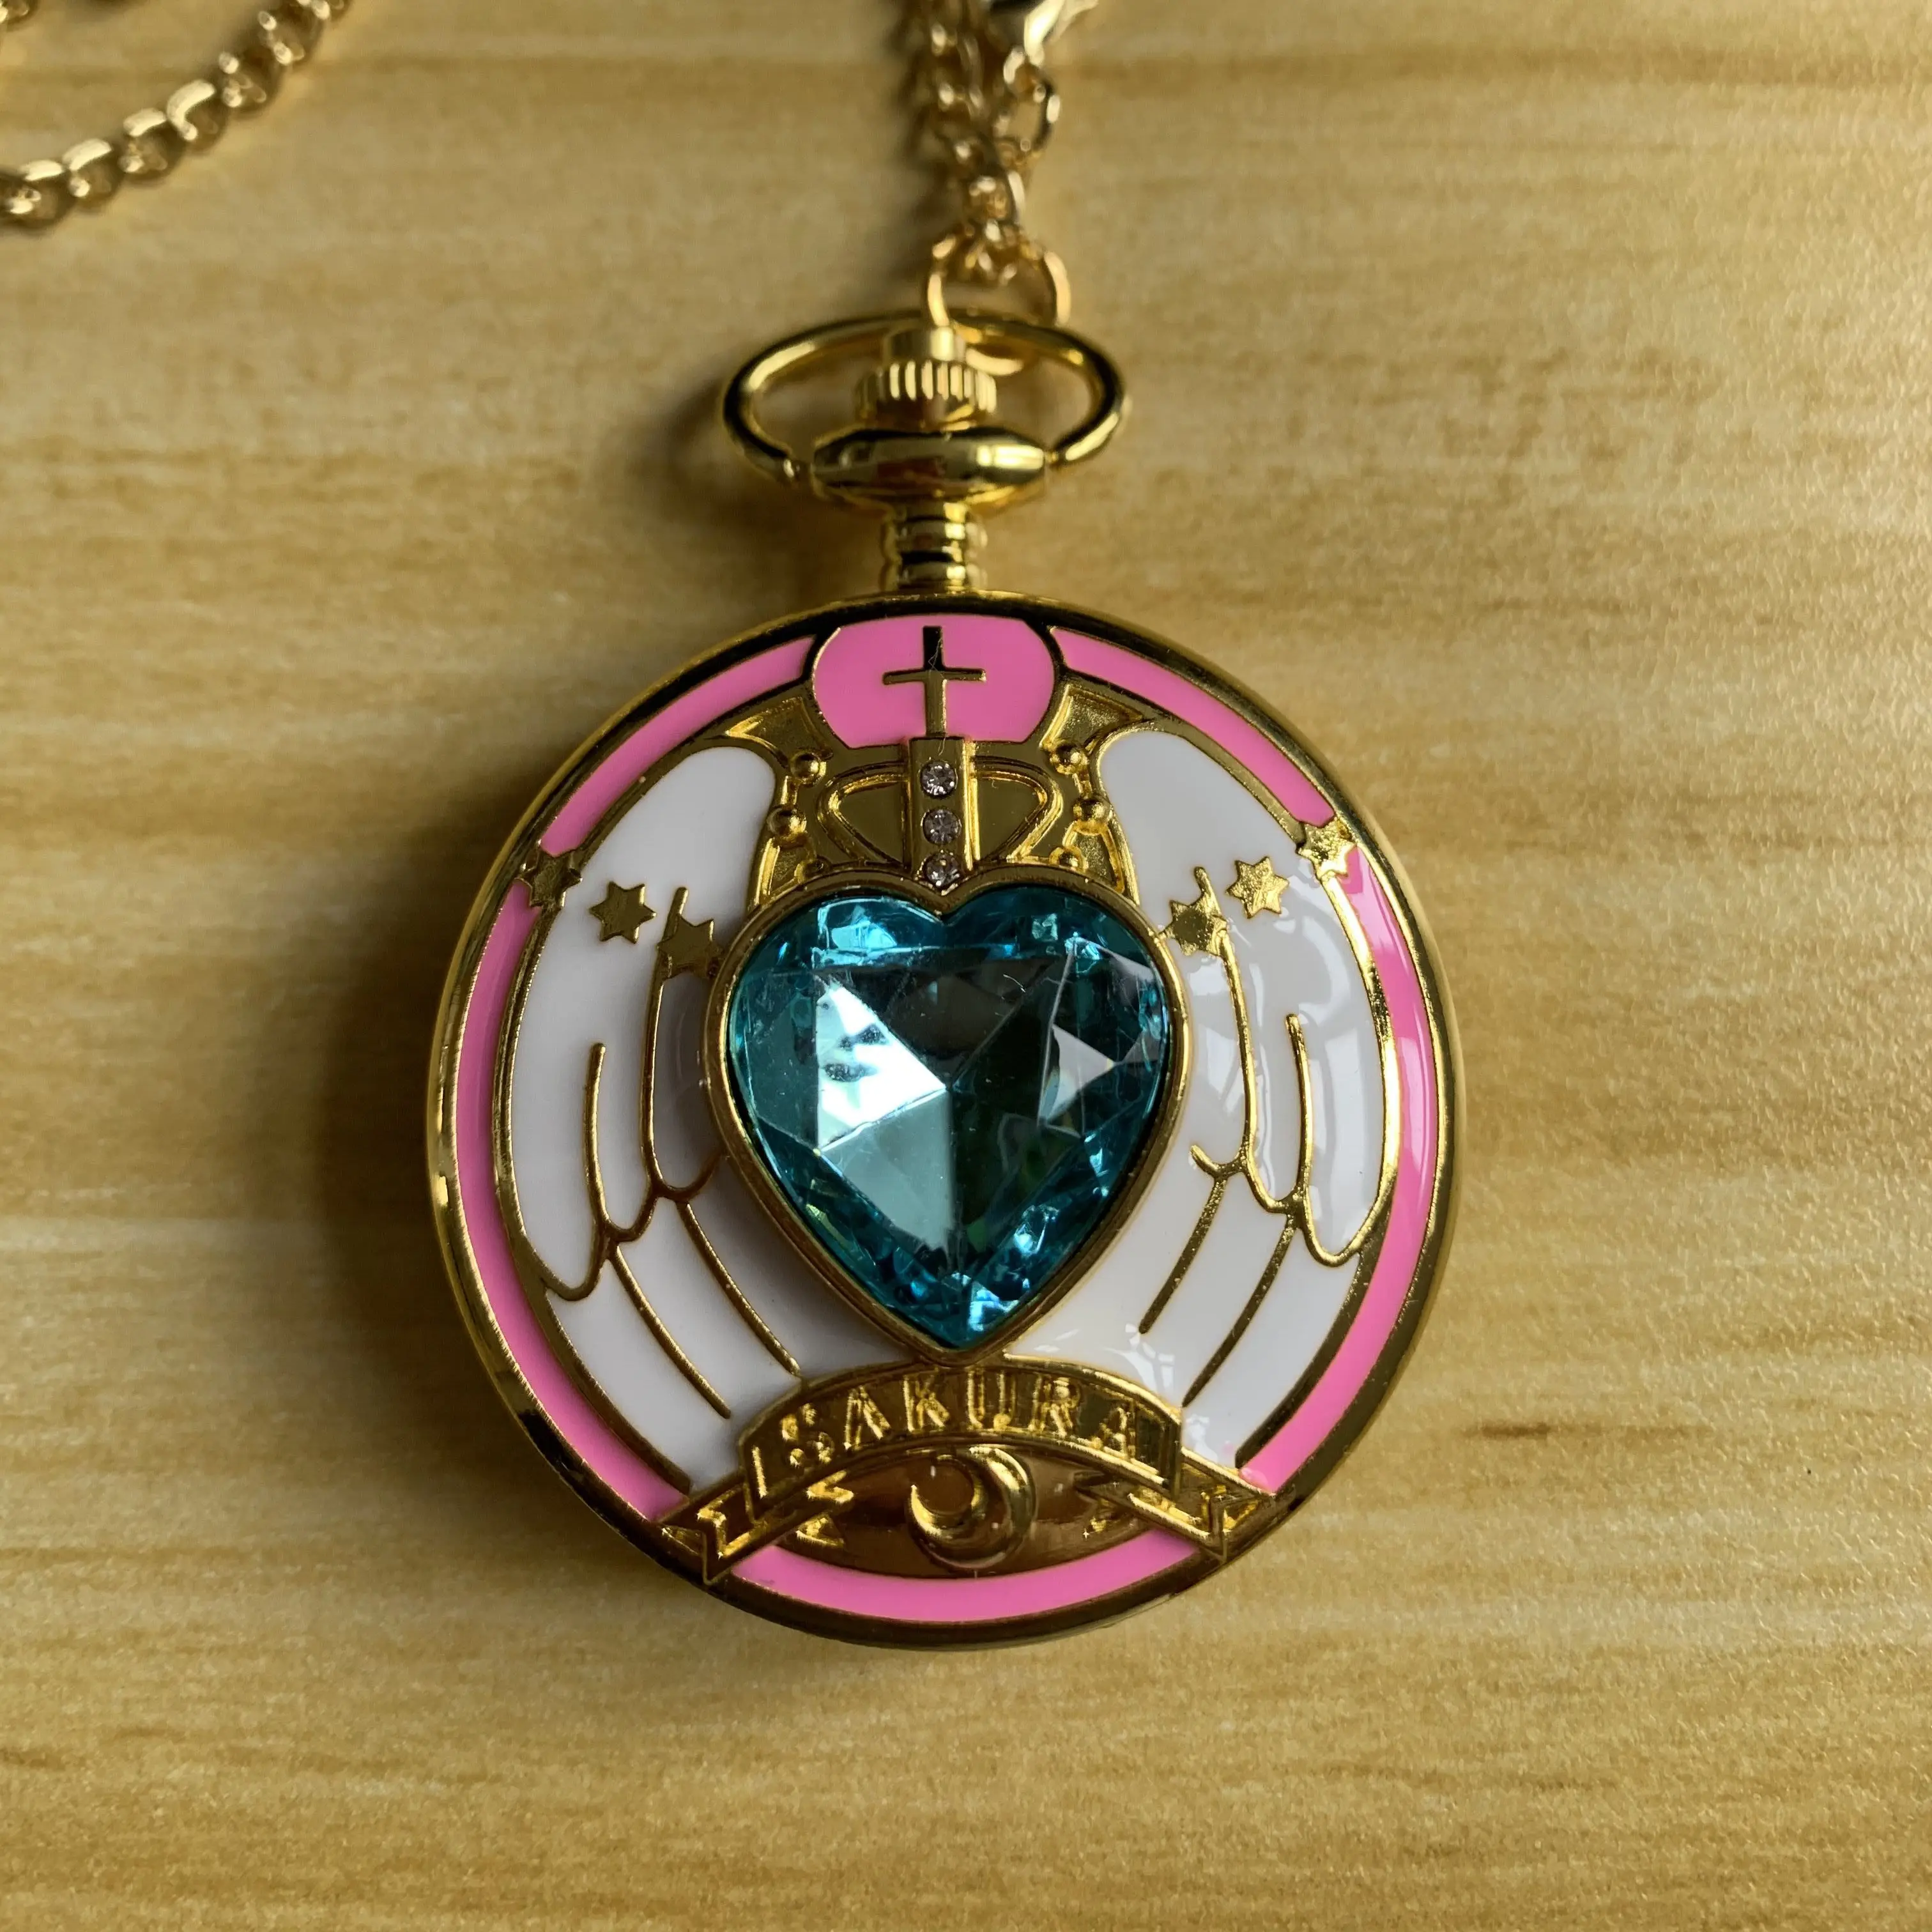 popular-japanese-anime-women's-quartz-pocket-watch-luxury-golden-necklace-pendant-chain-pocket-watch-girls-gift